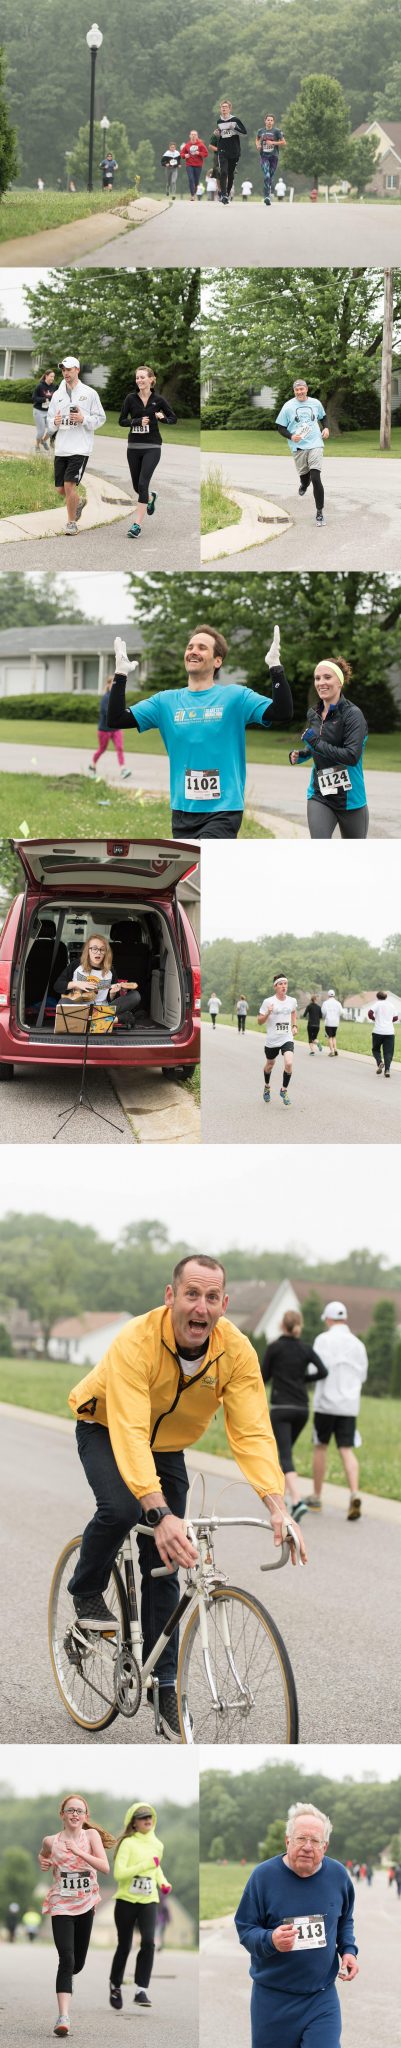 Chloe K 5K 2017 | Run for Autism | Renssleaer Indiana | Chloe Rayburn | Jeff and Susie Rayburn